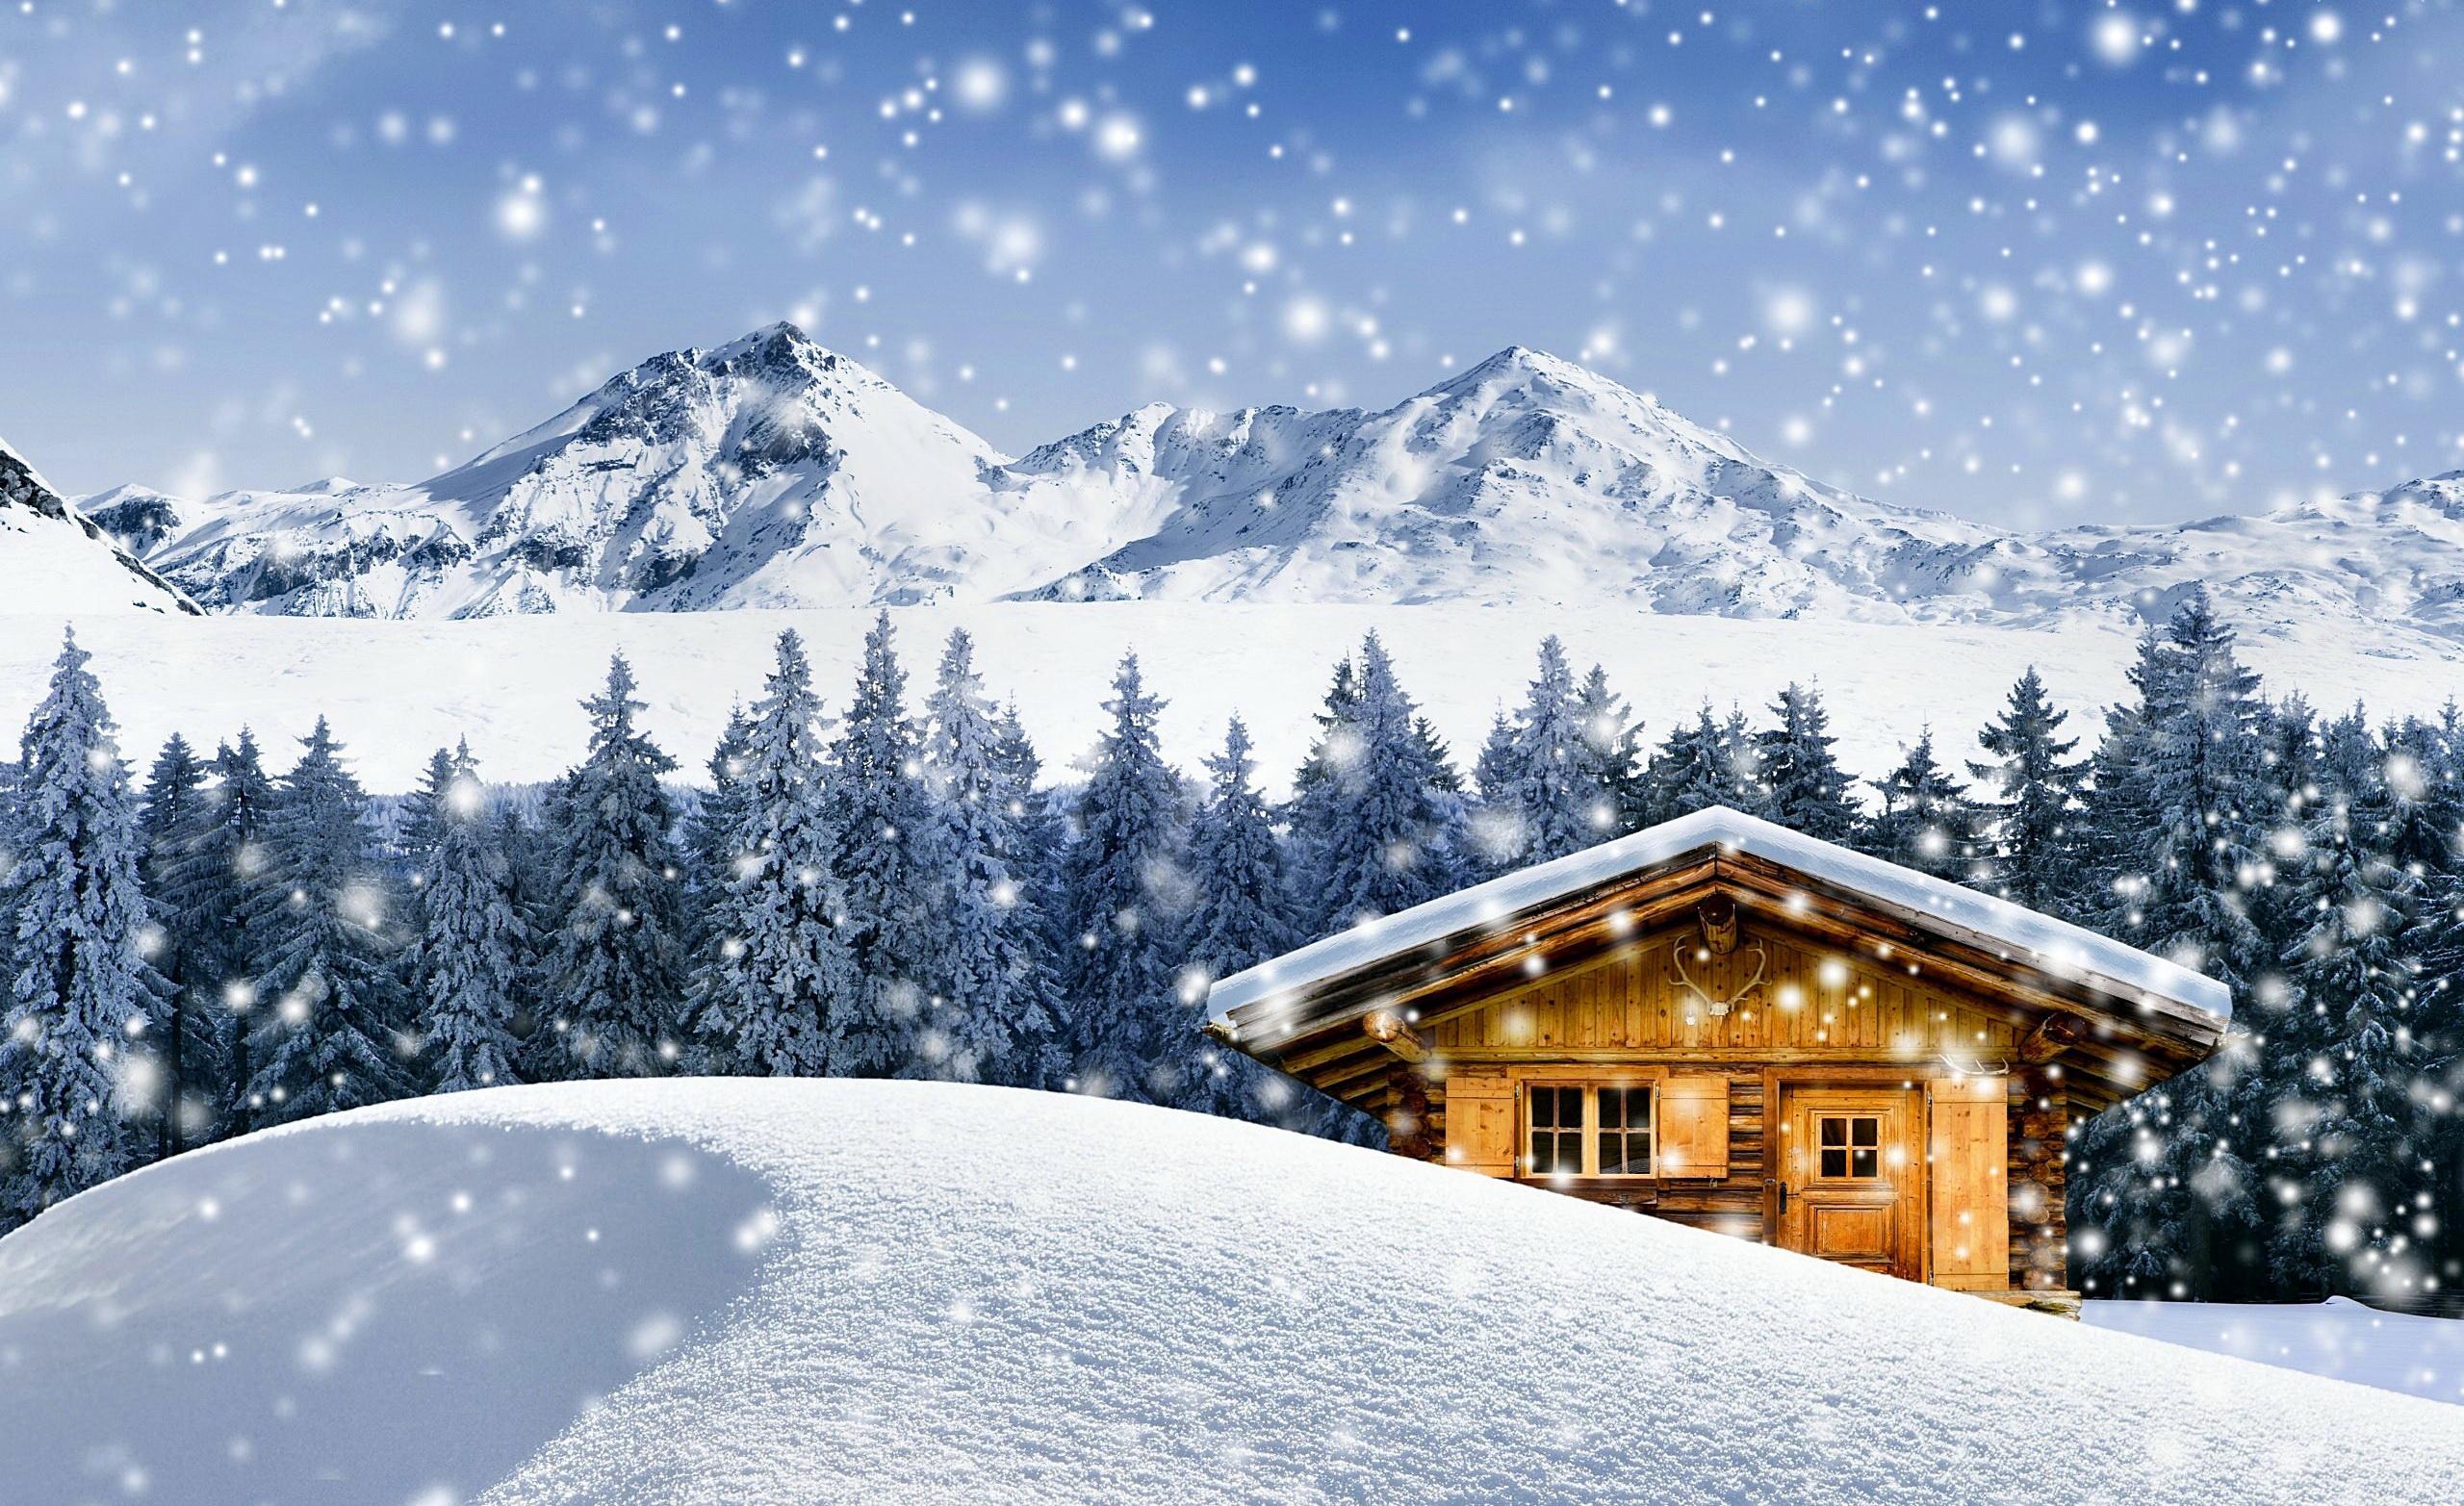 Download 2560x1565 Dream winter cottage wallpaper